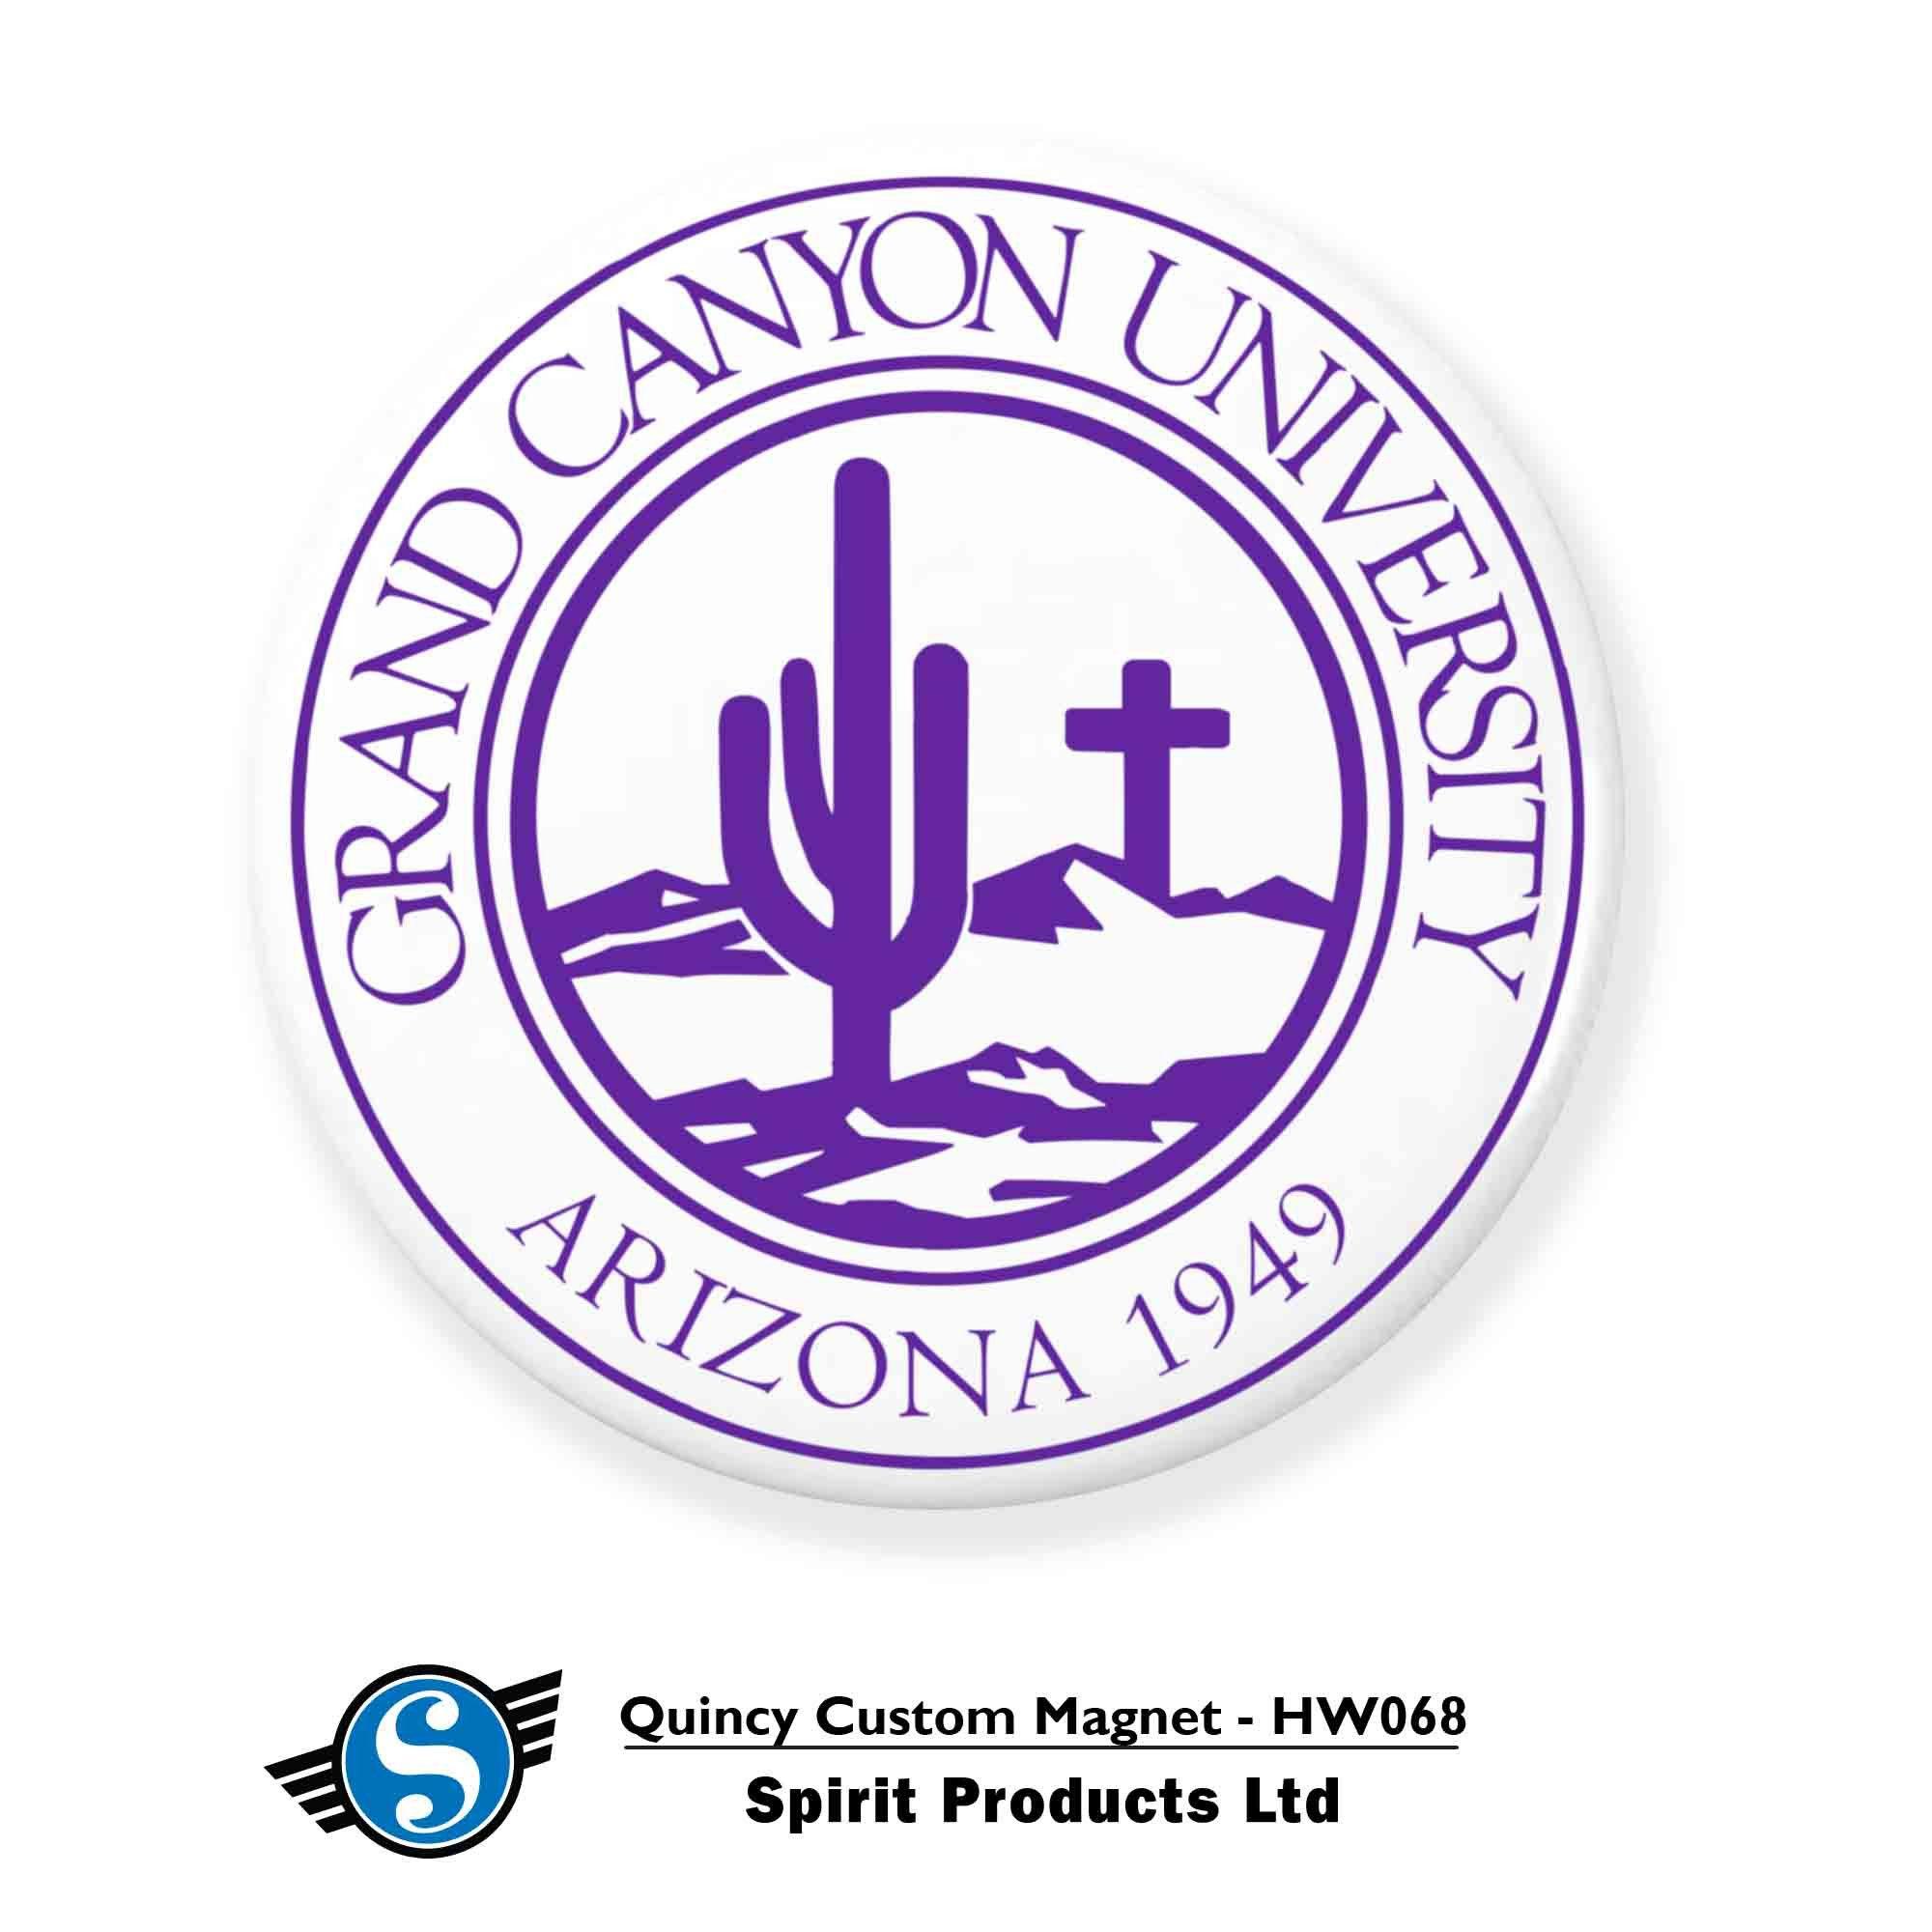 Grand Canyon University Logo - Grand Canyon University Seal Magnet